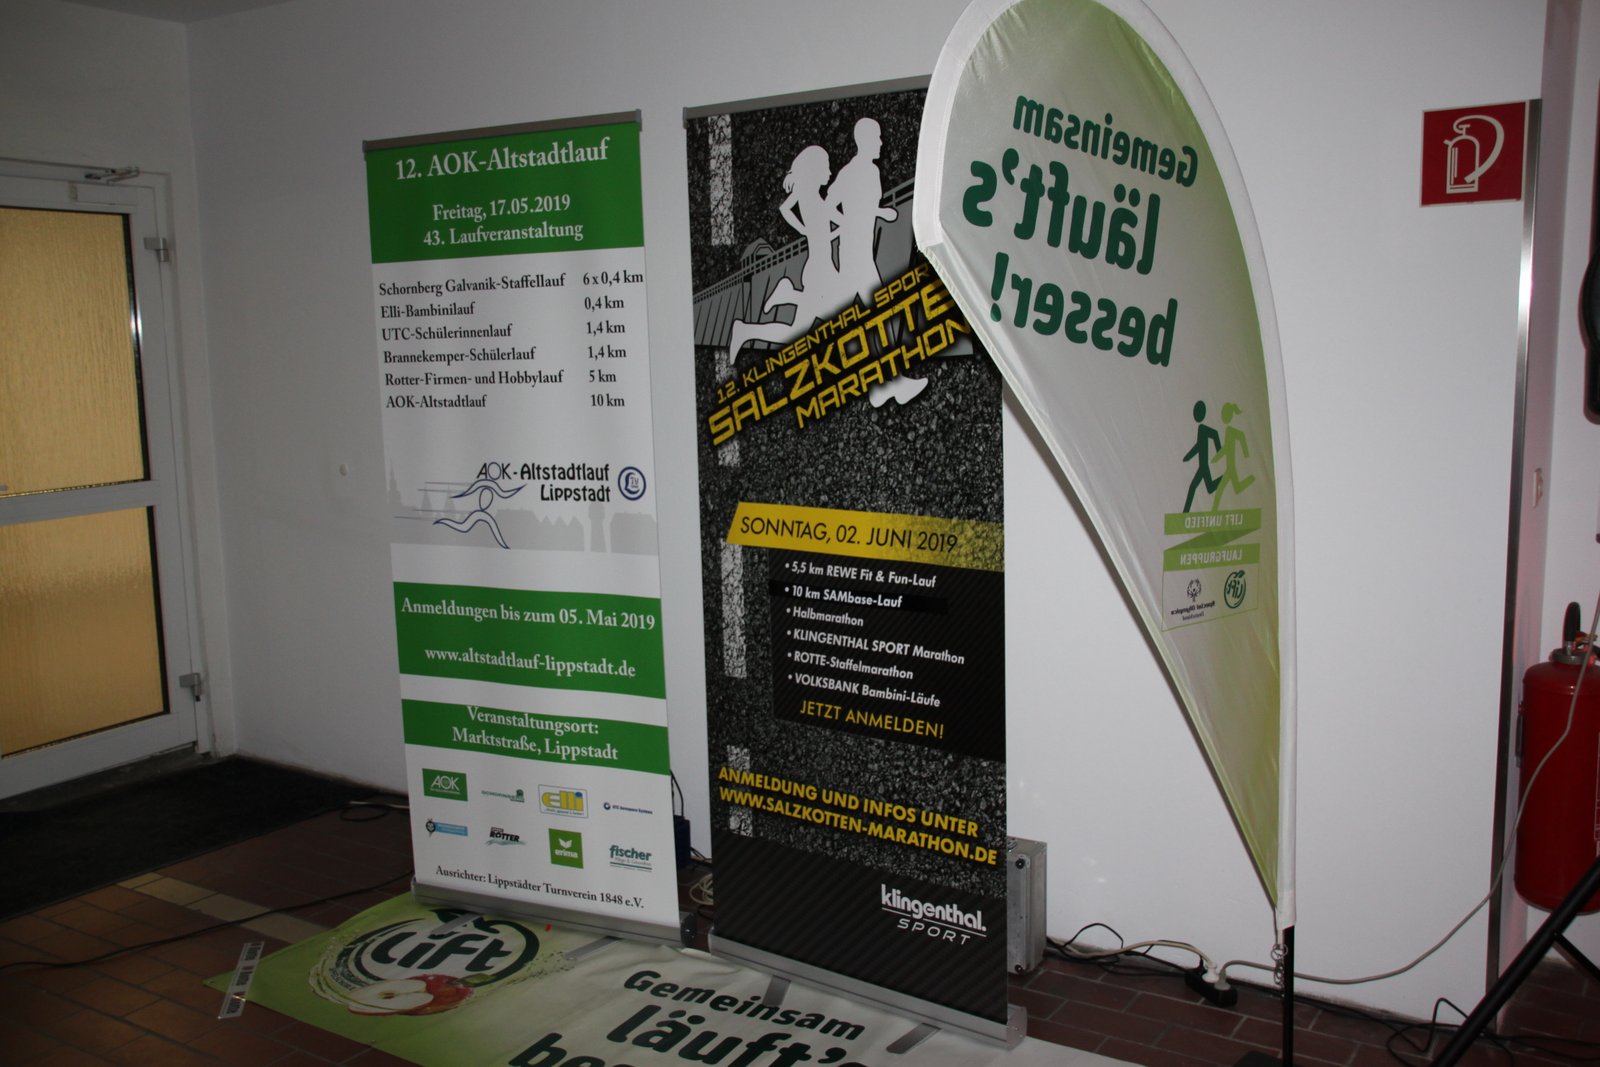 Klingenthal Sport Marathon Rotte